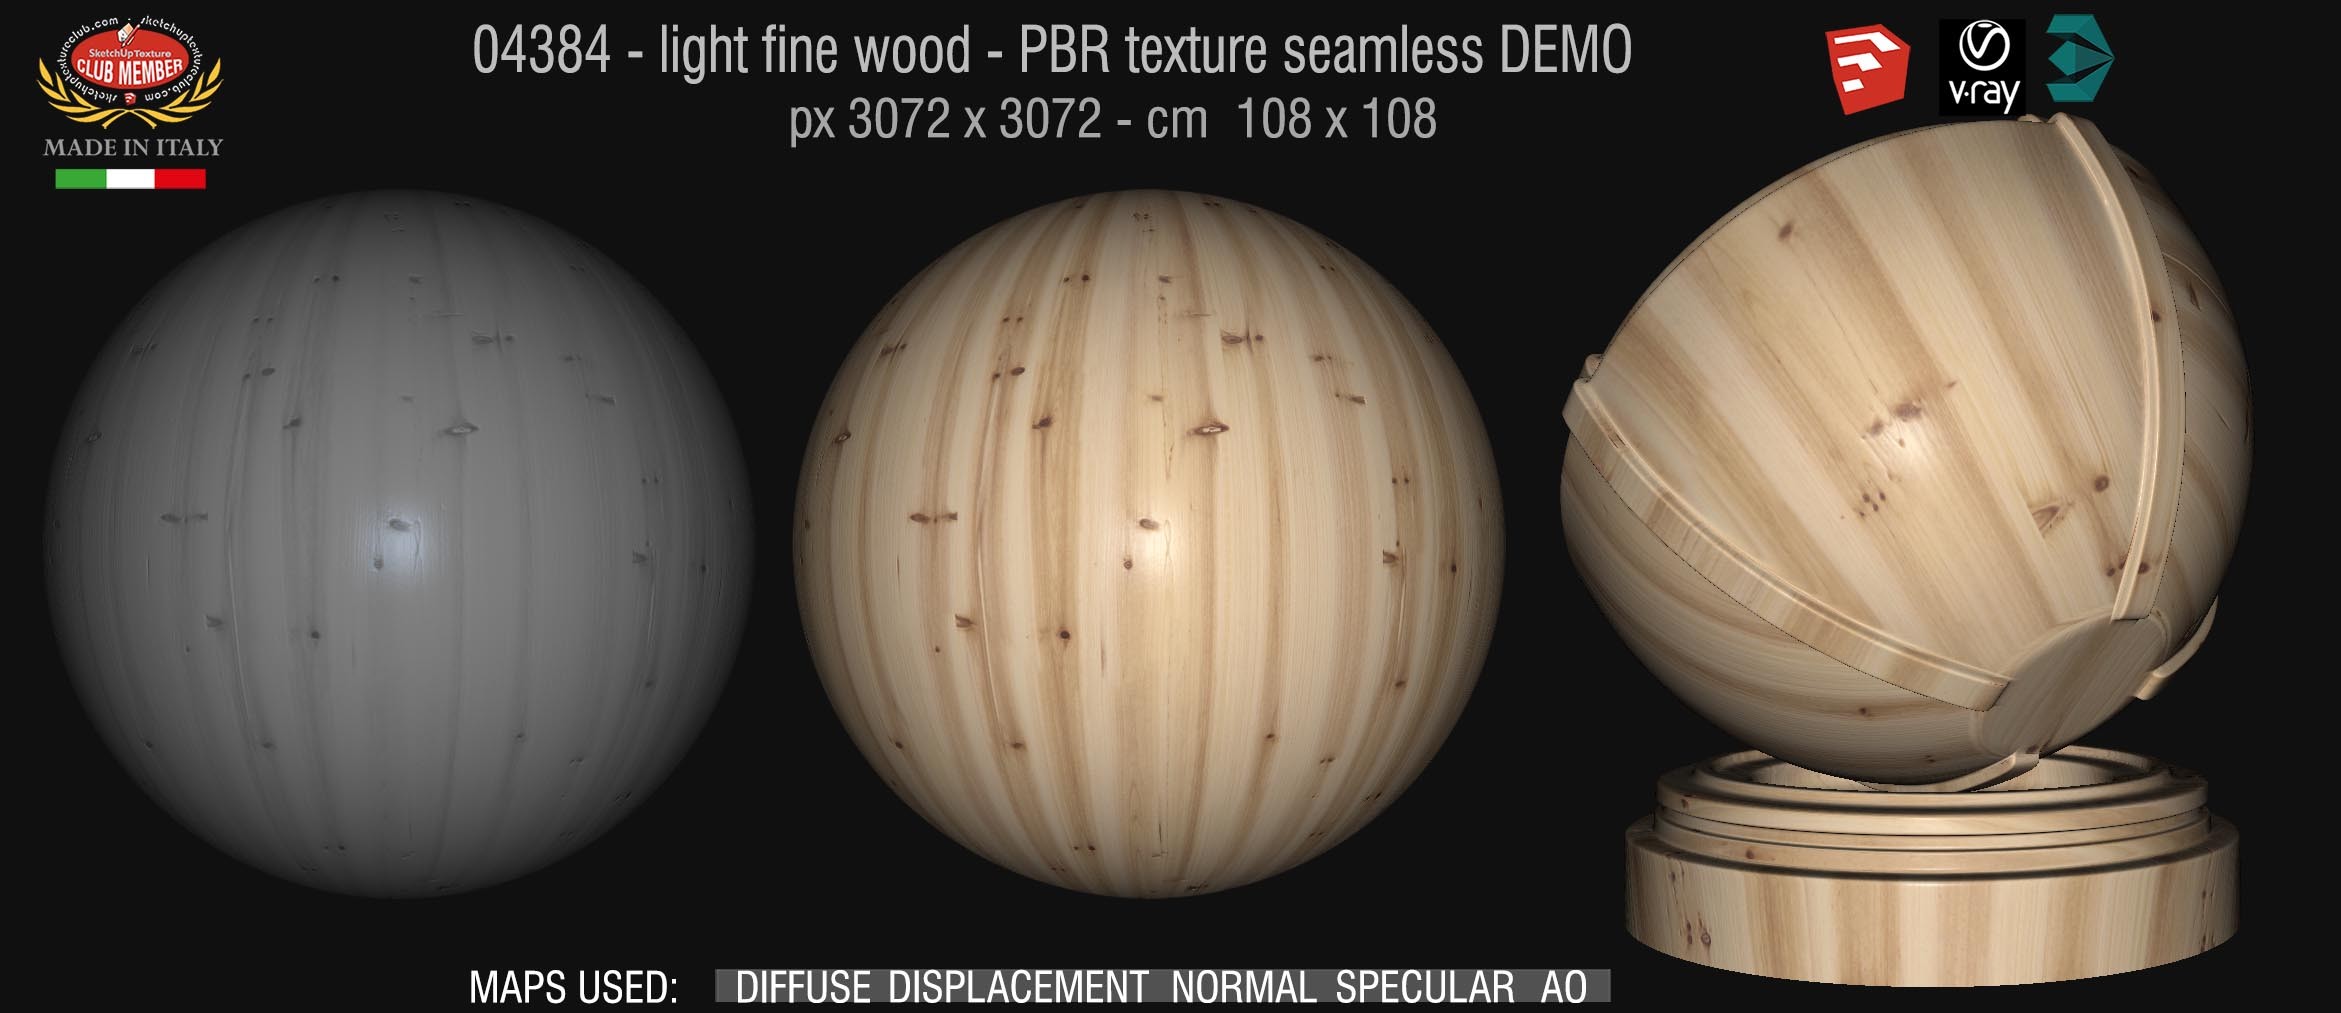 04384 light fine wood - PBR texture seamless DEMO